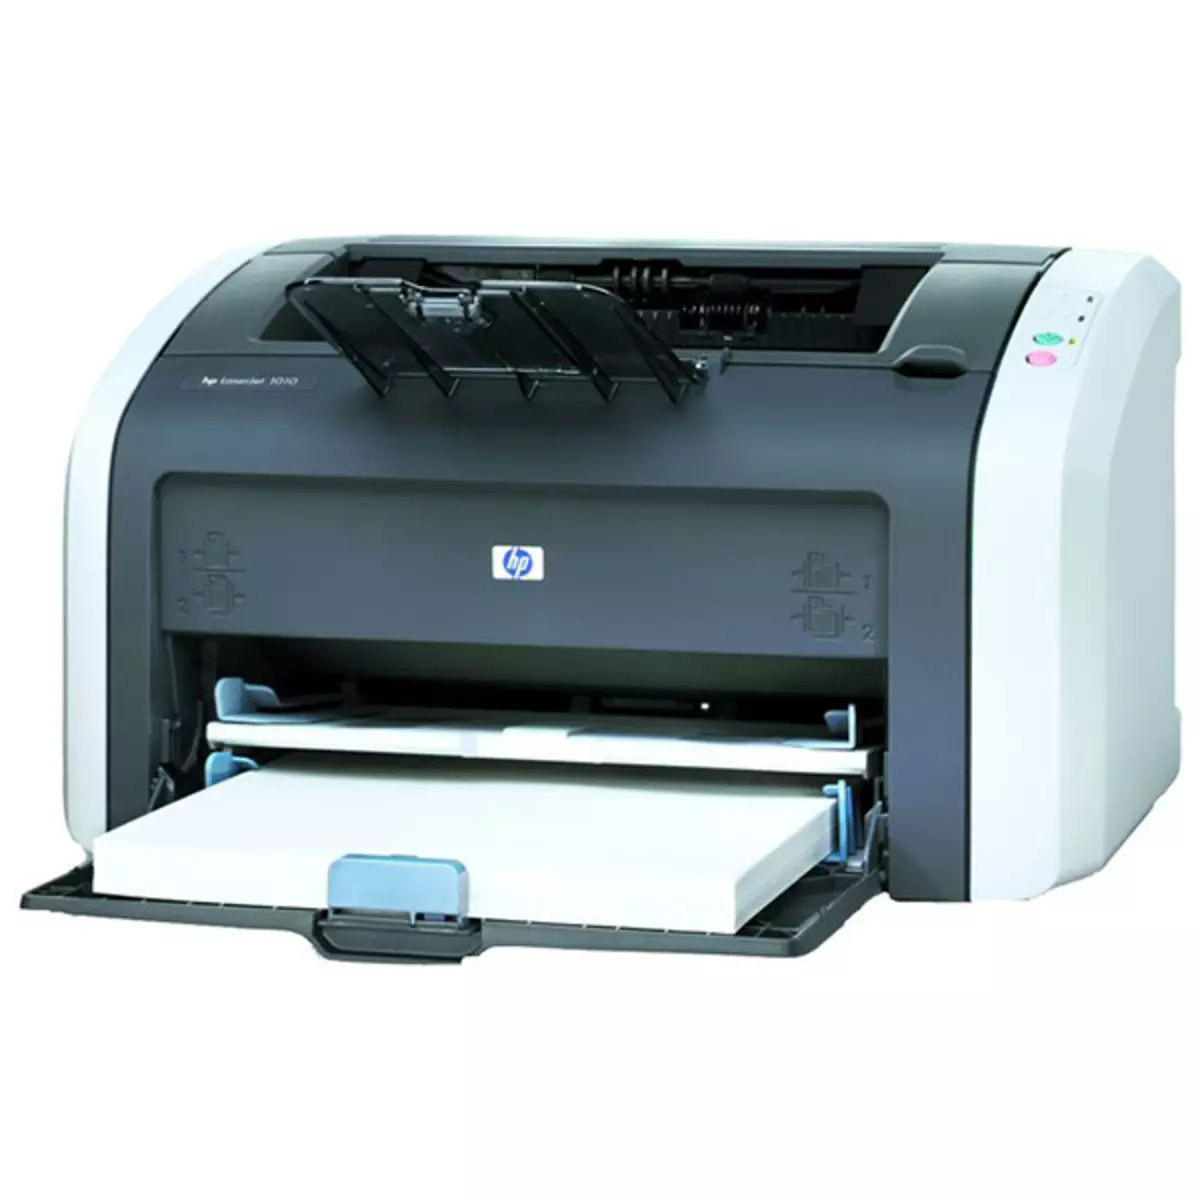 Download HP LaserJet 1010 printerdriver